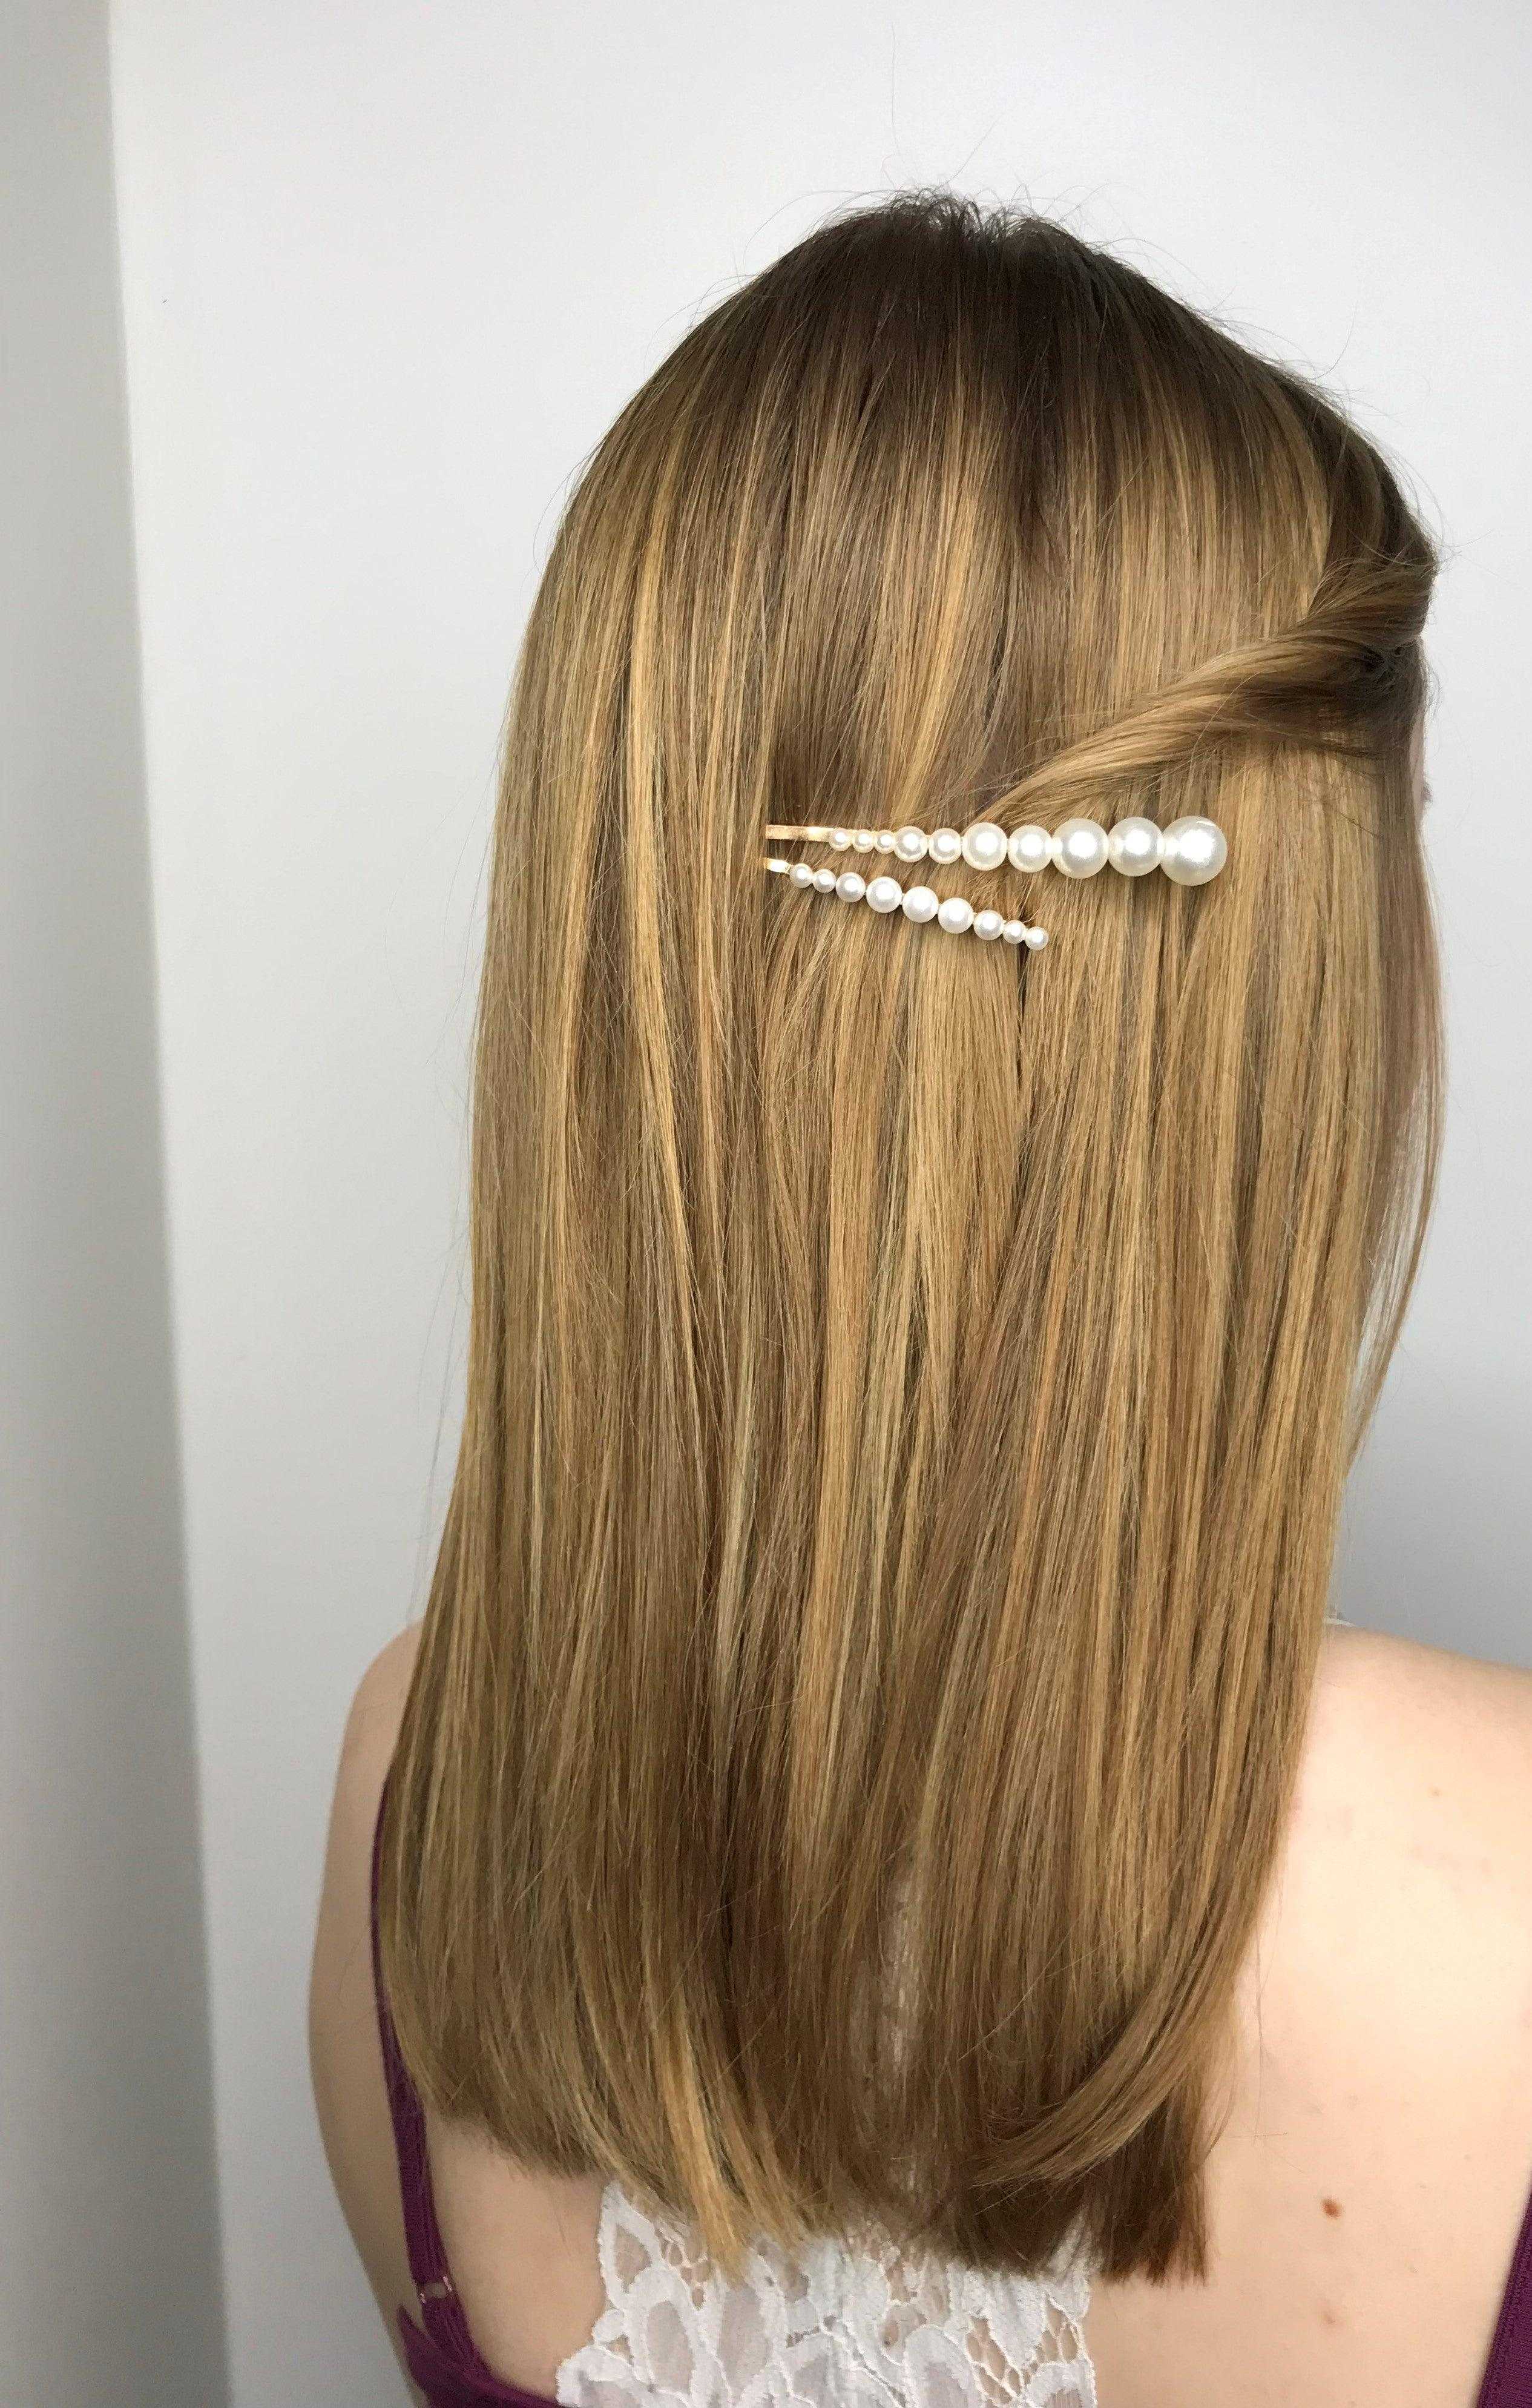 PIECES BY BONBON Lisa hairclip Pieces by bonbon